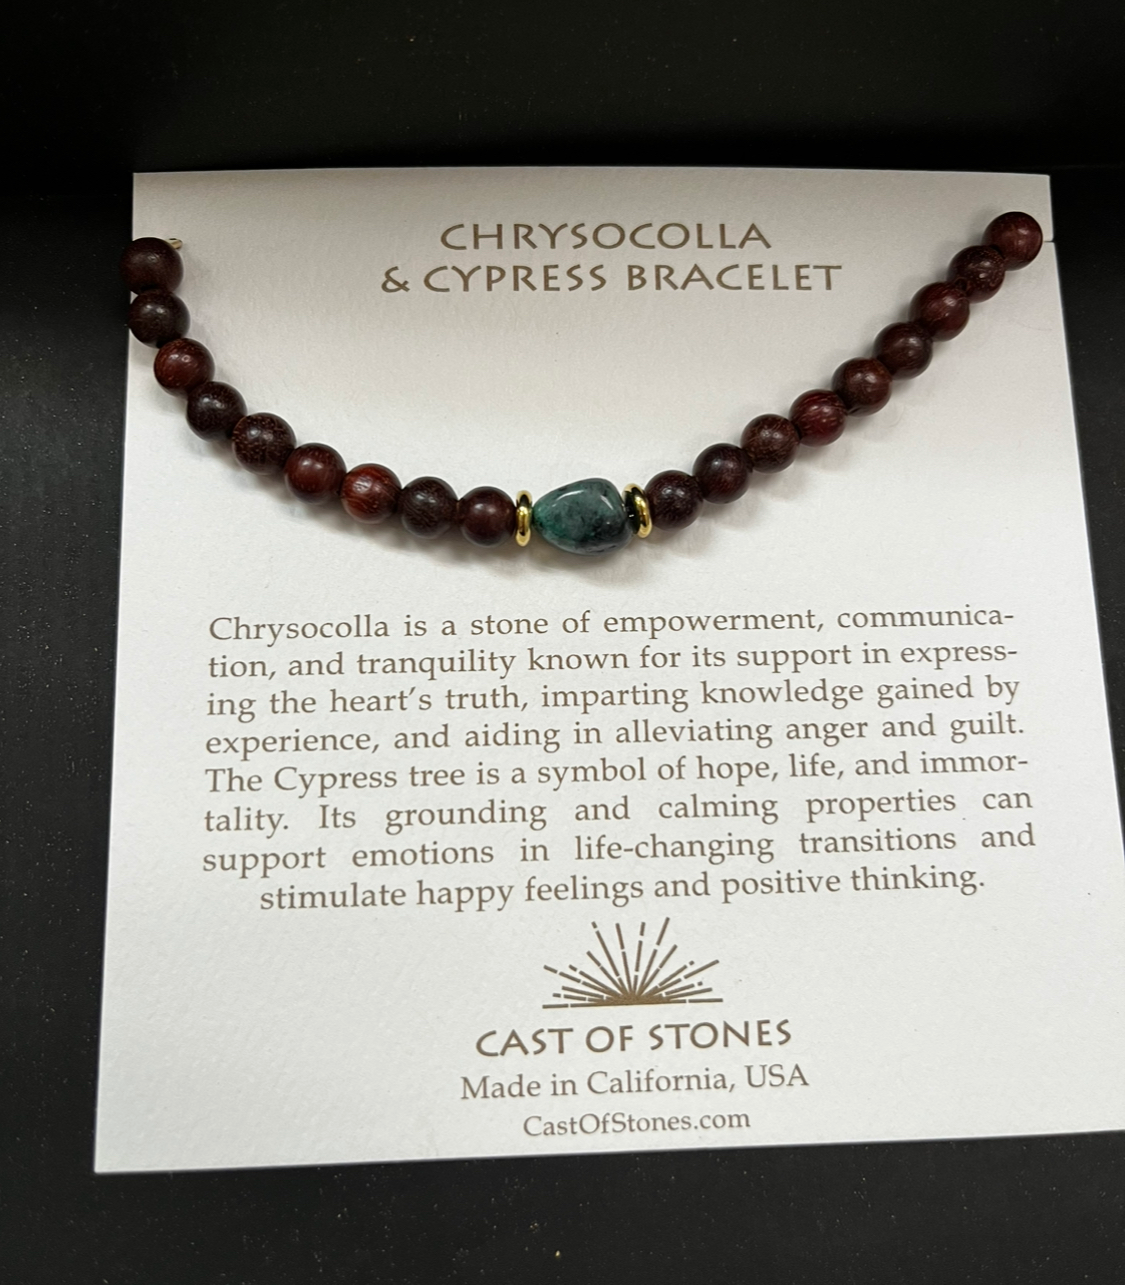 Chrysocolla/Cypress Bracelet